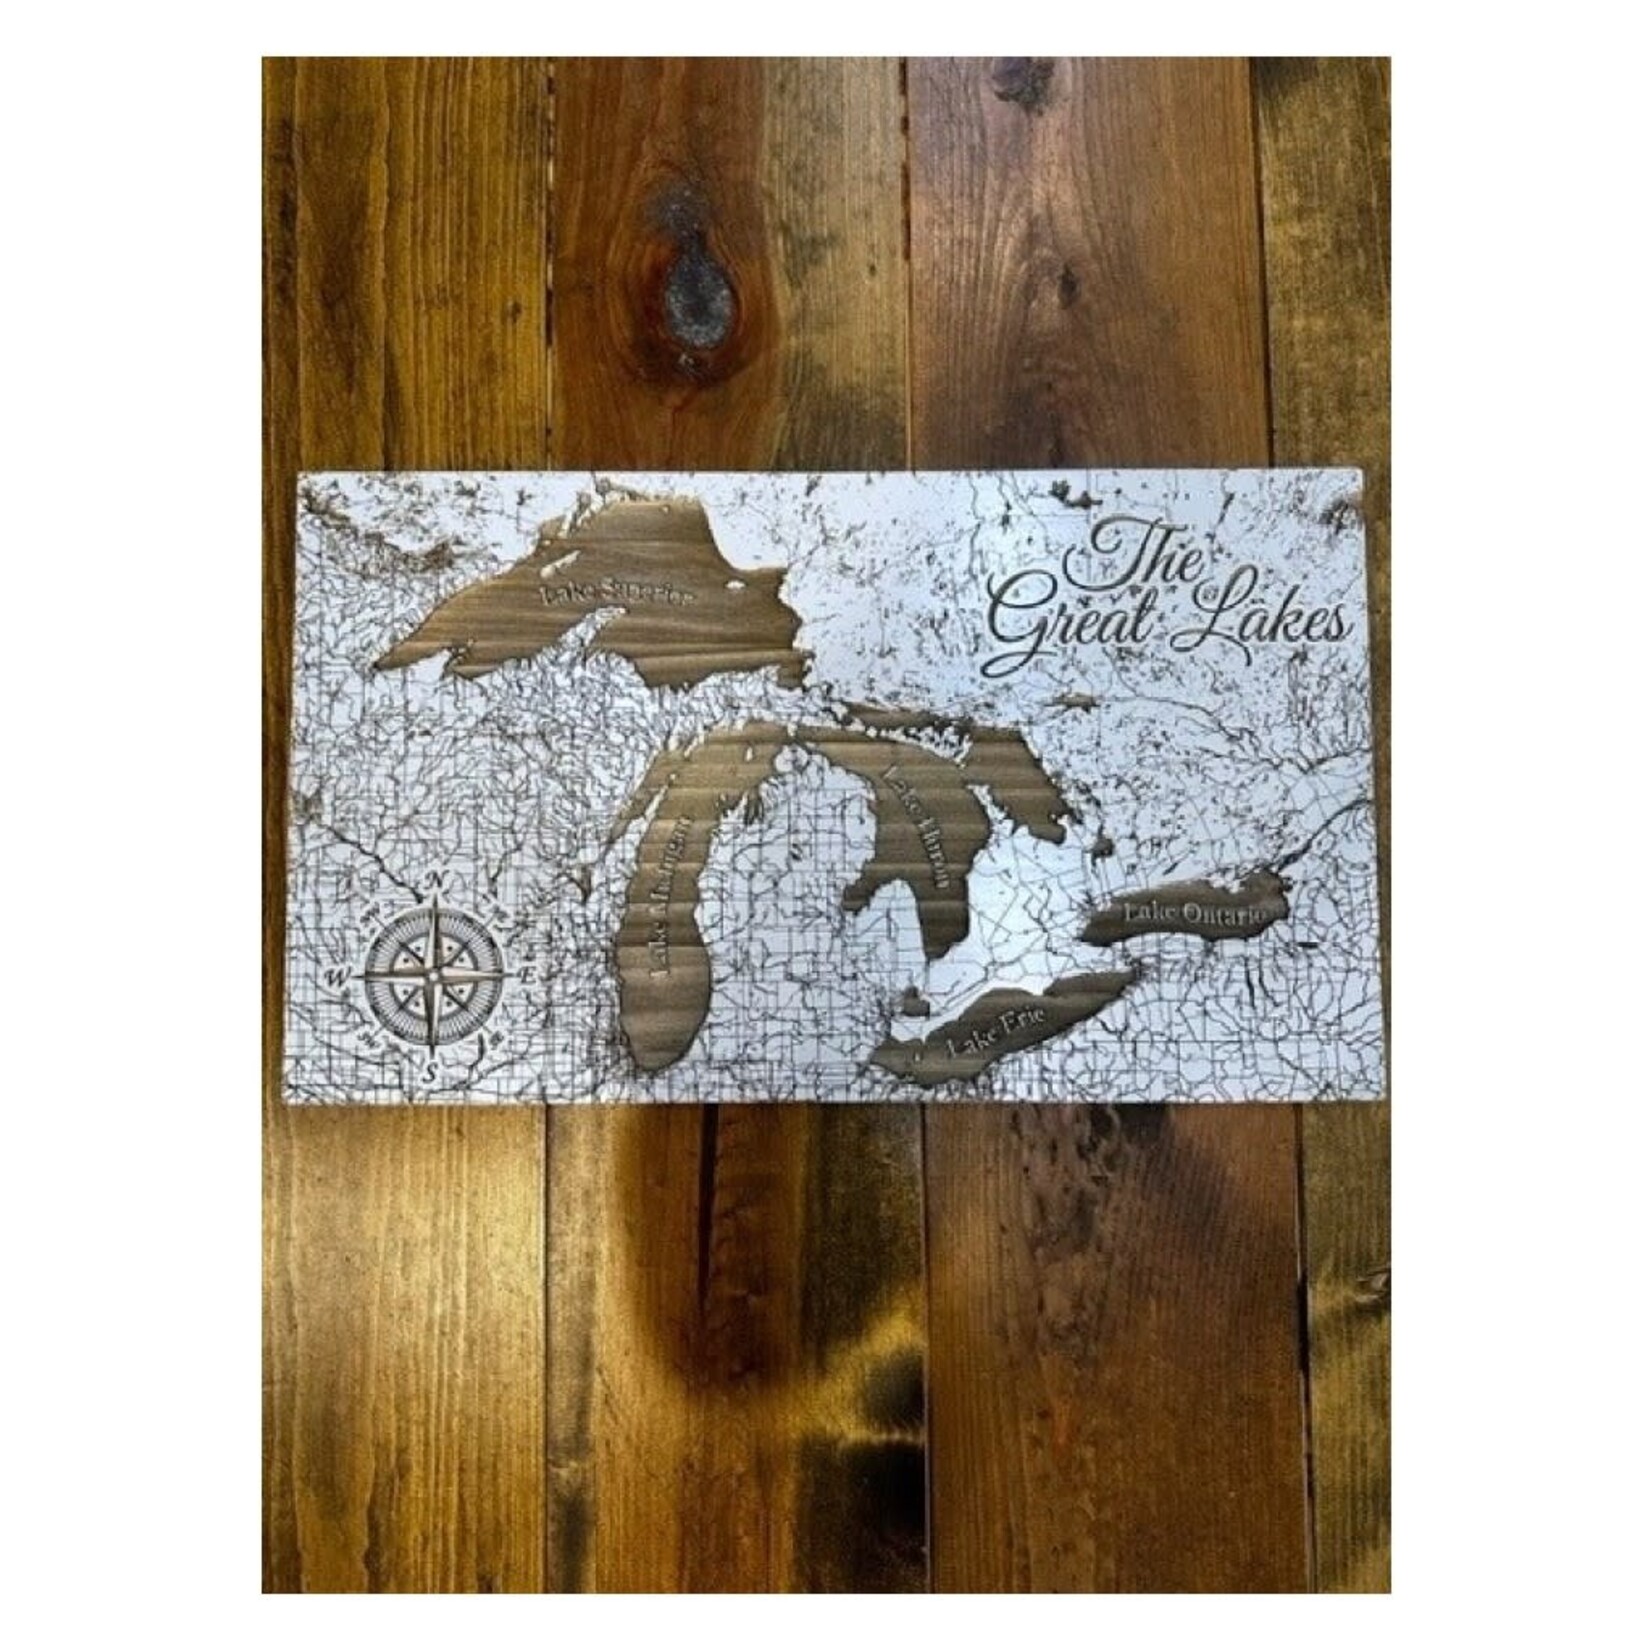 Great Lakes Map - Schmedium -